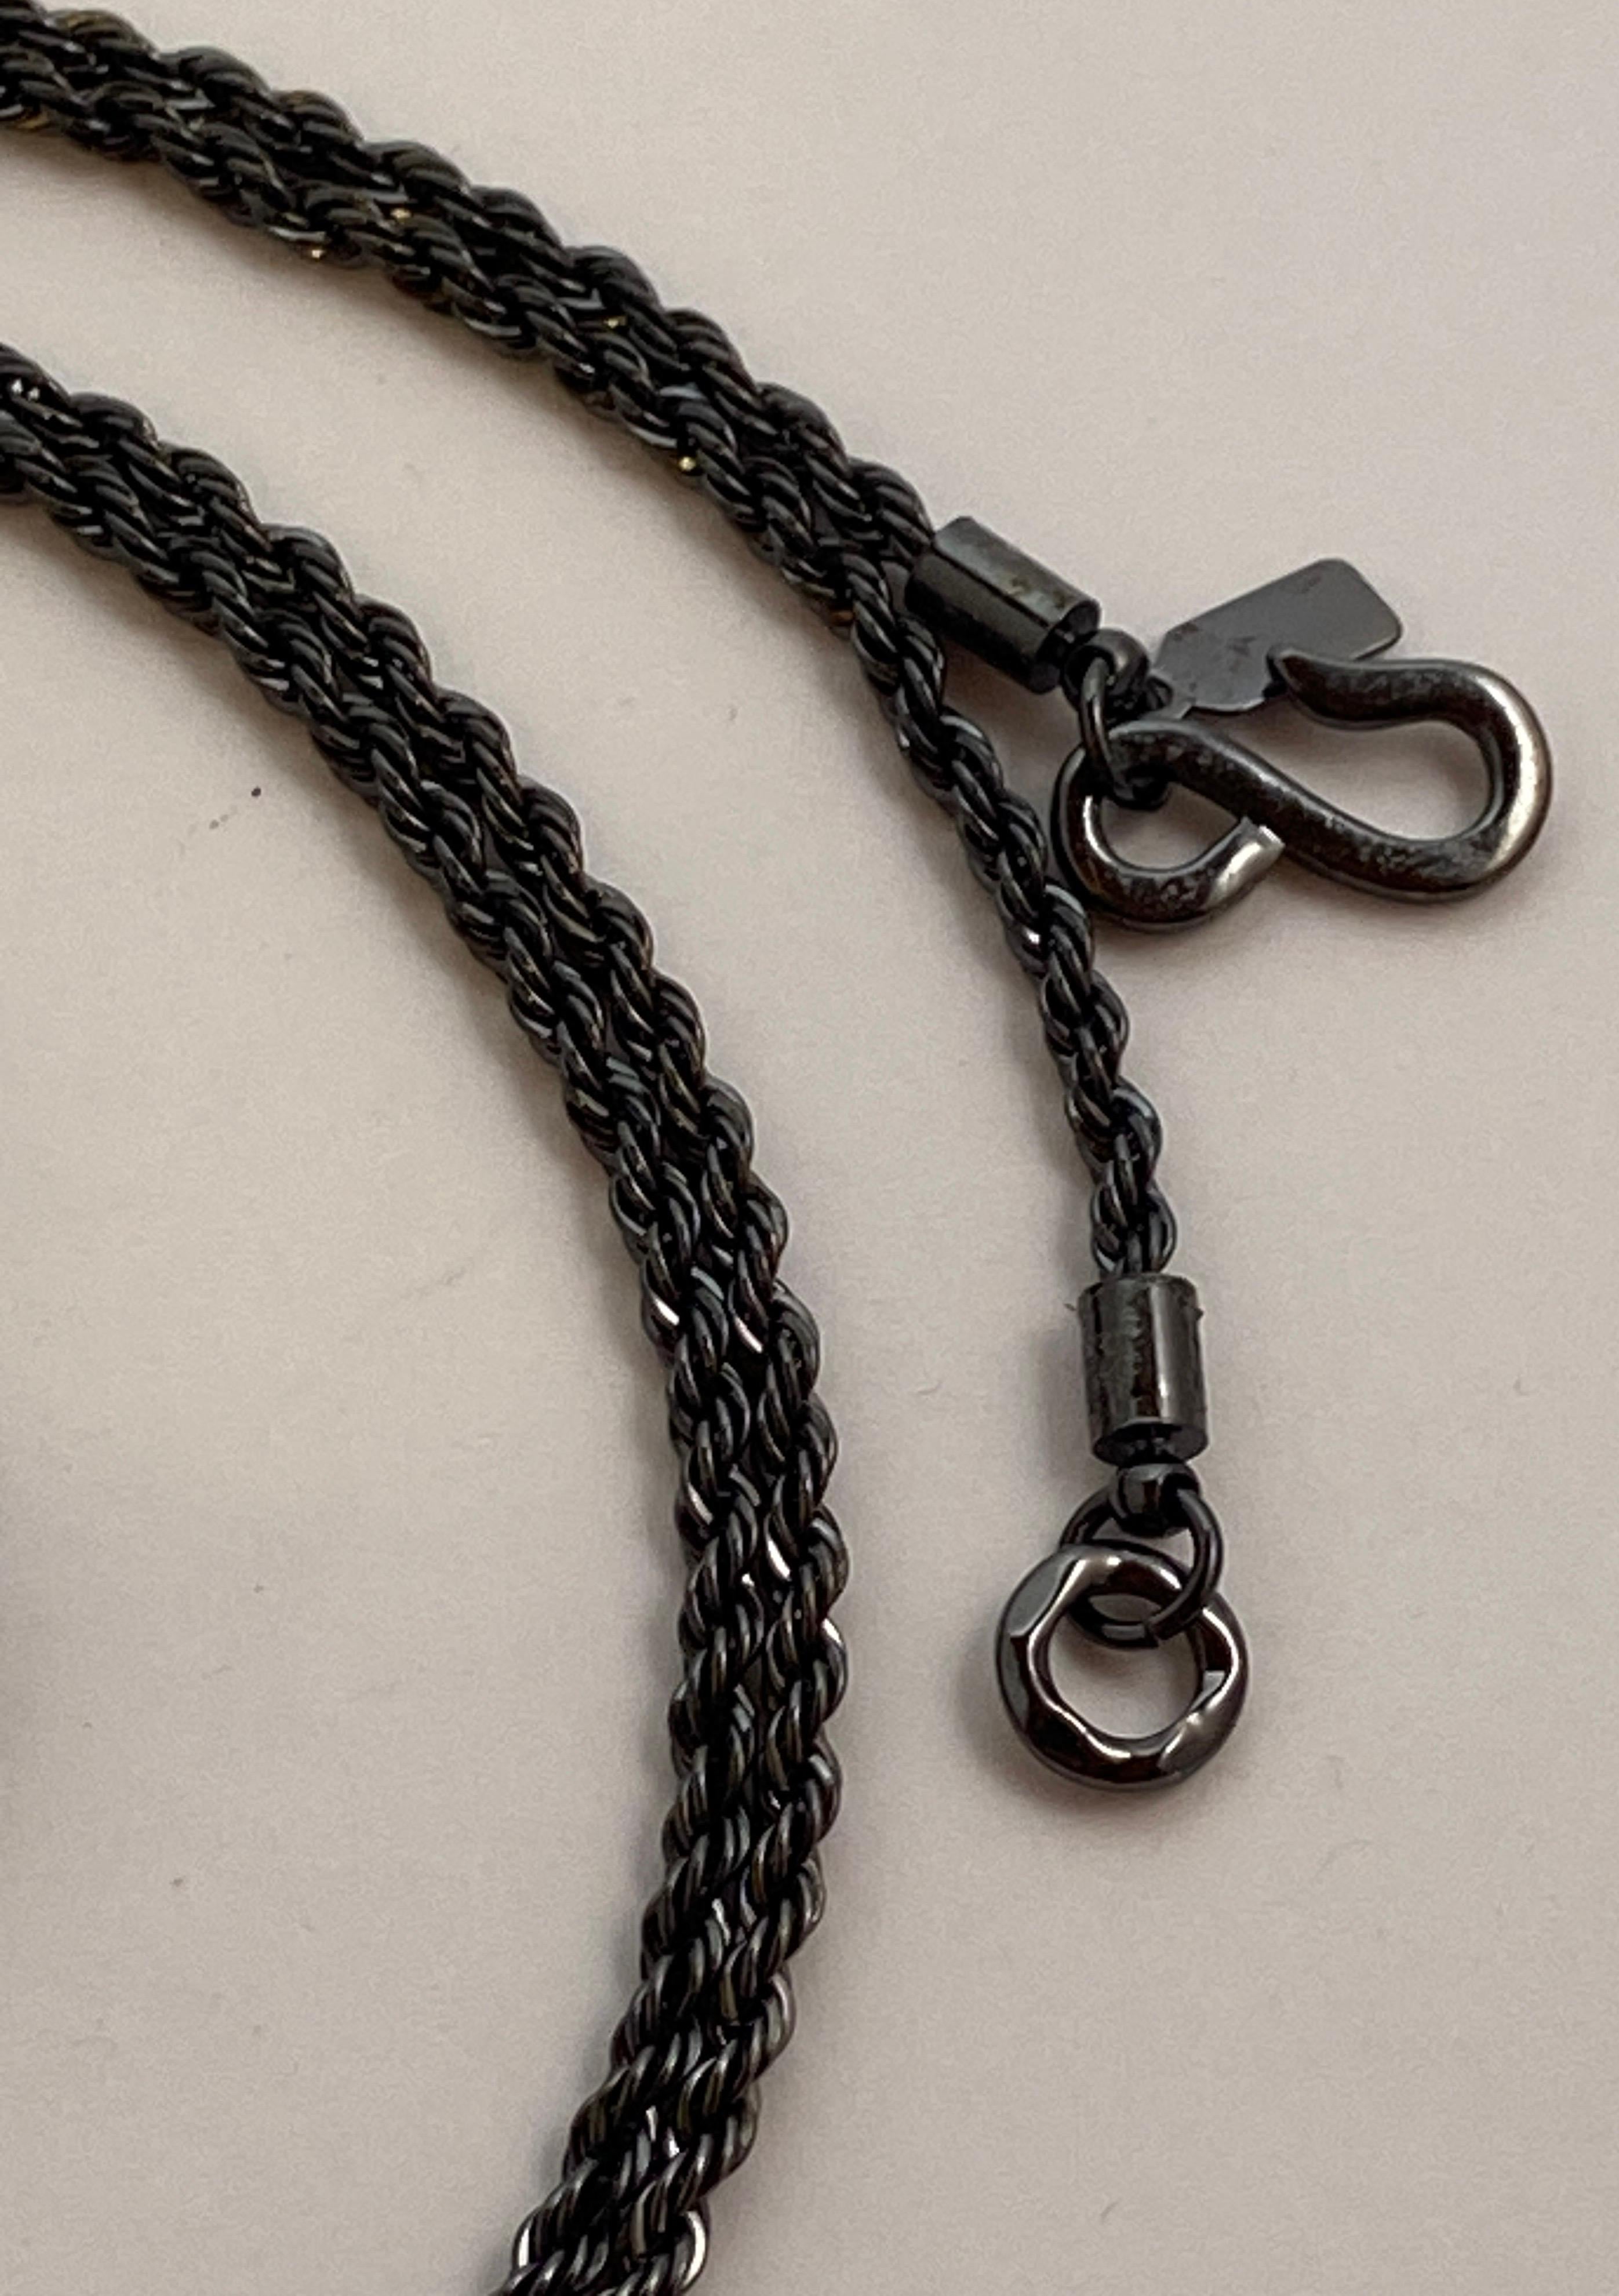  Kenneth Jay Lane - Ensemble pendentif et collier « serpent » en strass noir de taille moyenne Unisexe 